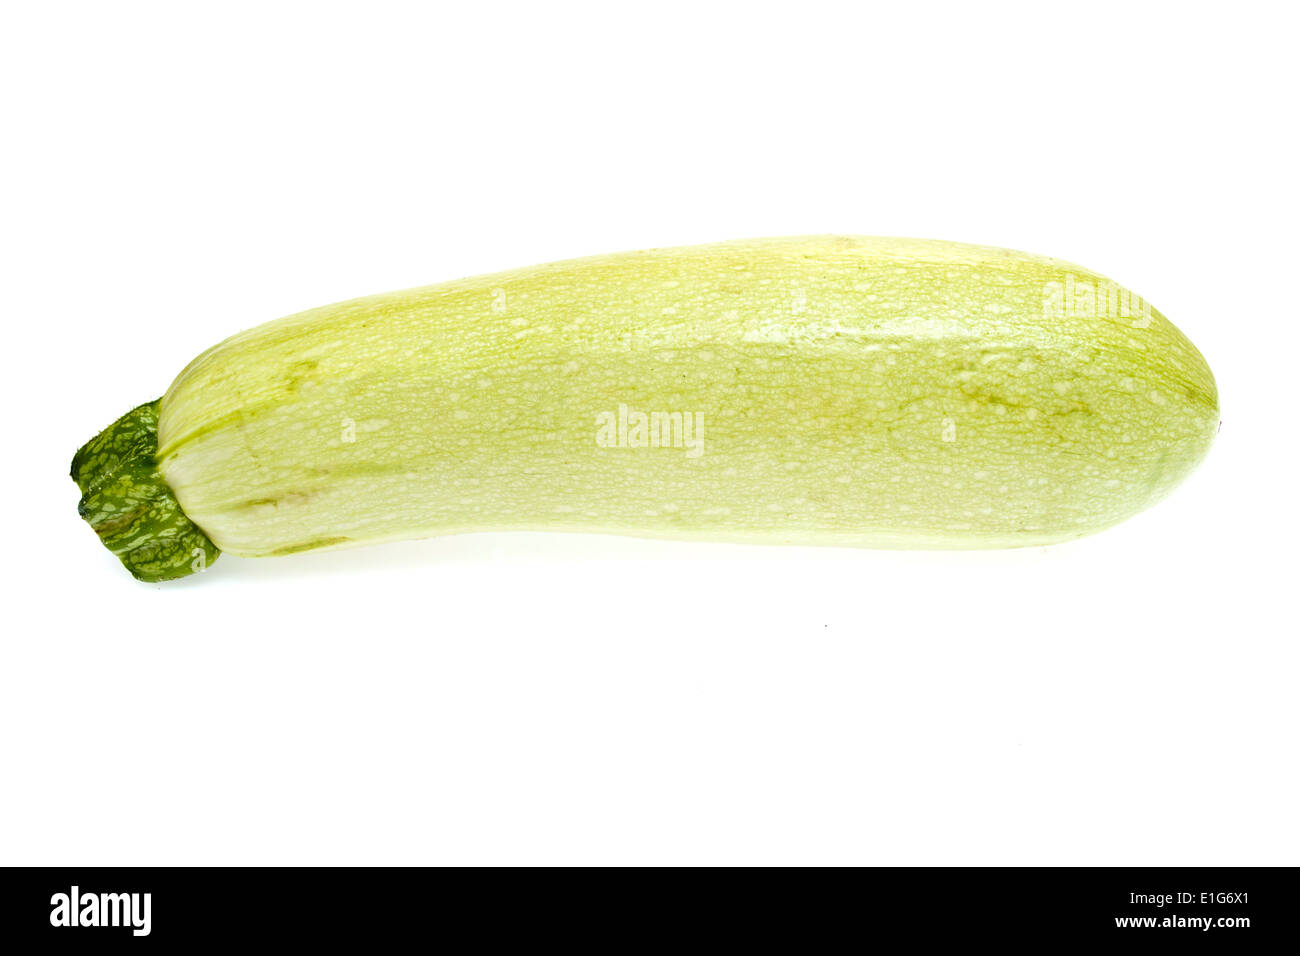 The Fresh Zucchini Isolated on White Background. Stock Photo